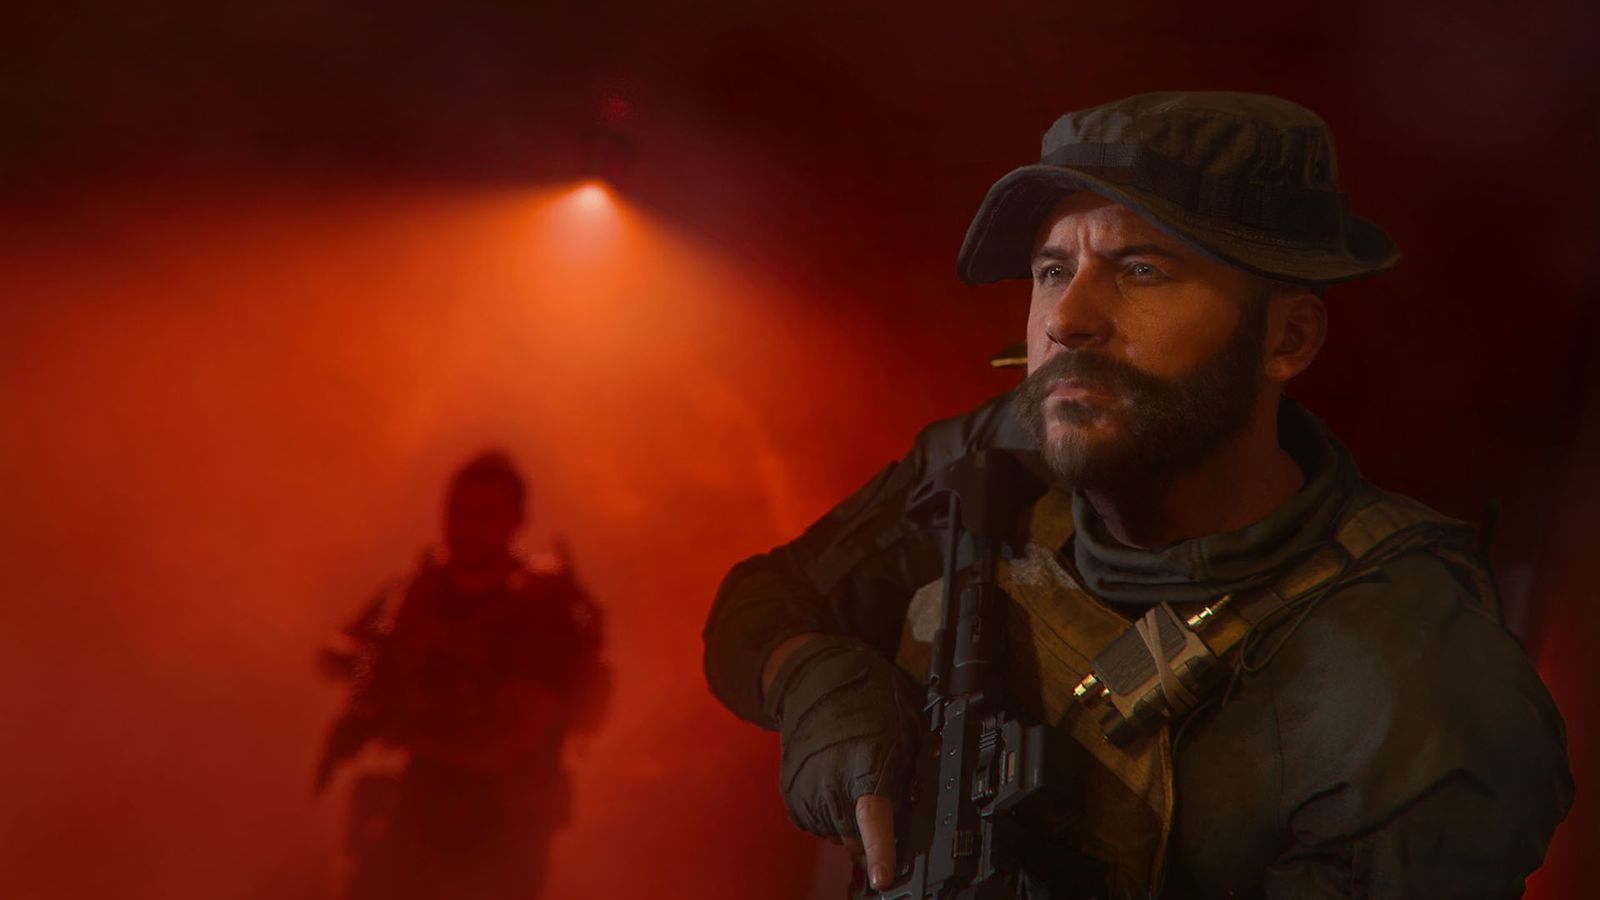 Modern Warfare 3 Captain Price on red background